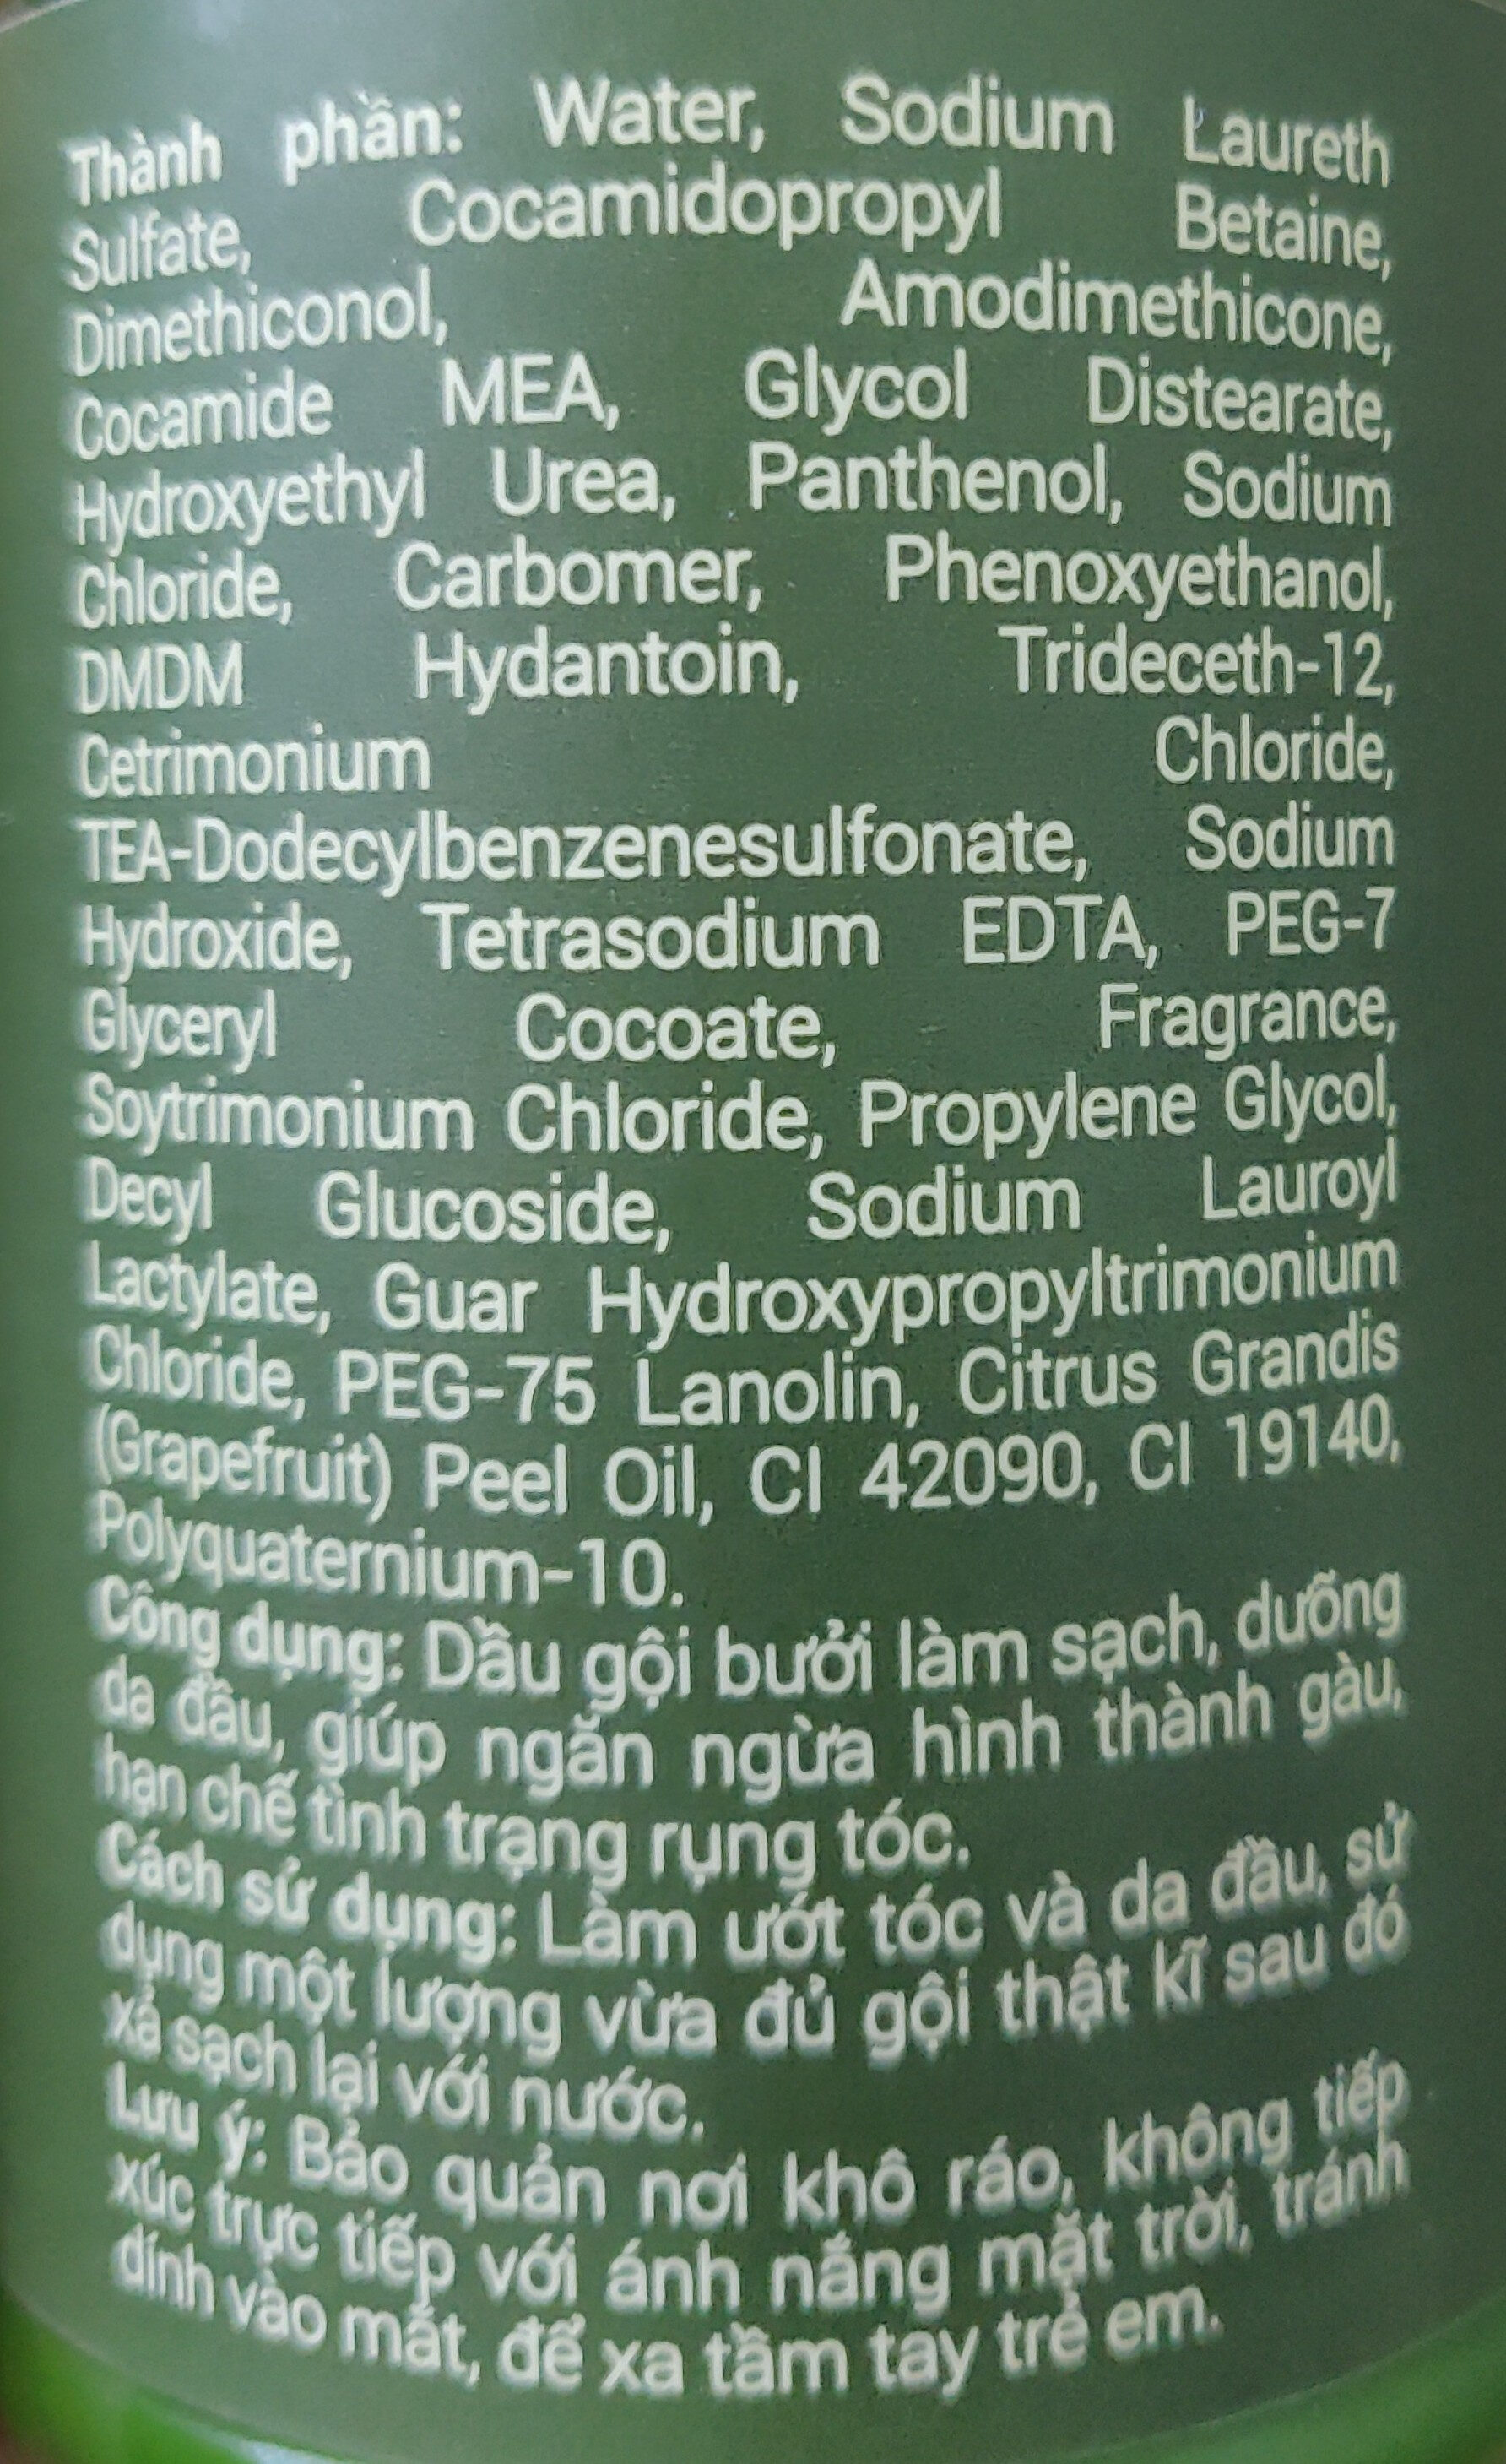 pomelo shampoo - Ingredients - vi